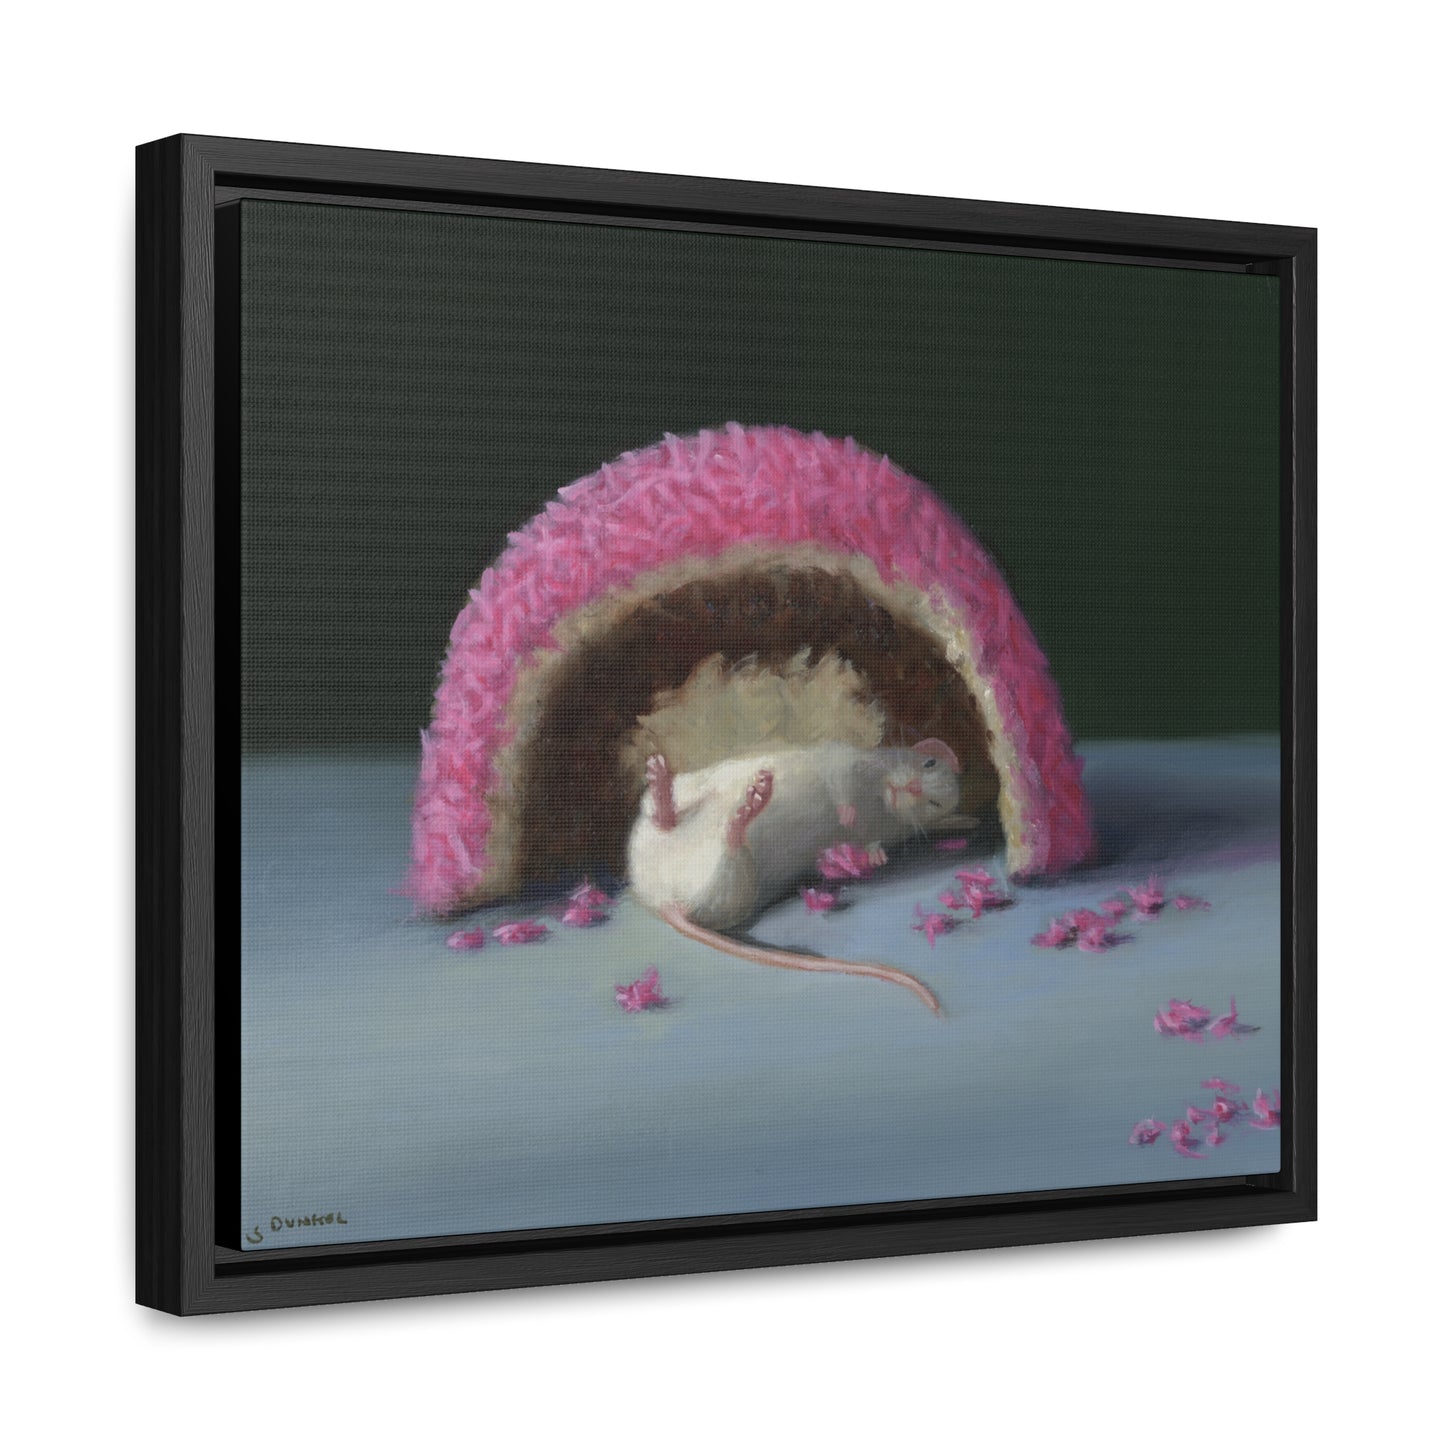 Stuart Dunkel: "Overdose" - Framed Canvas Reproduction